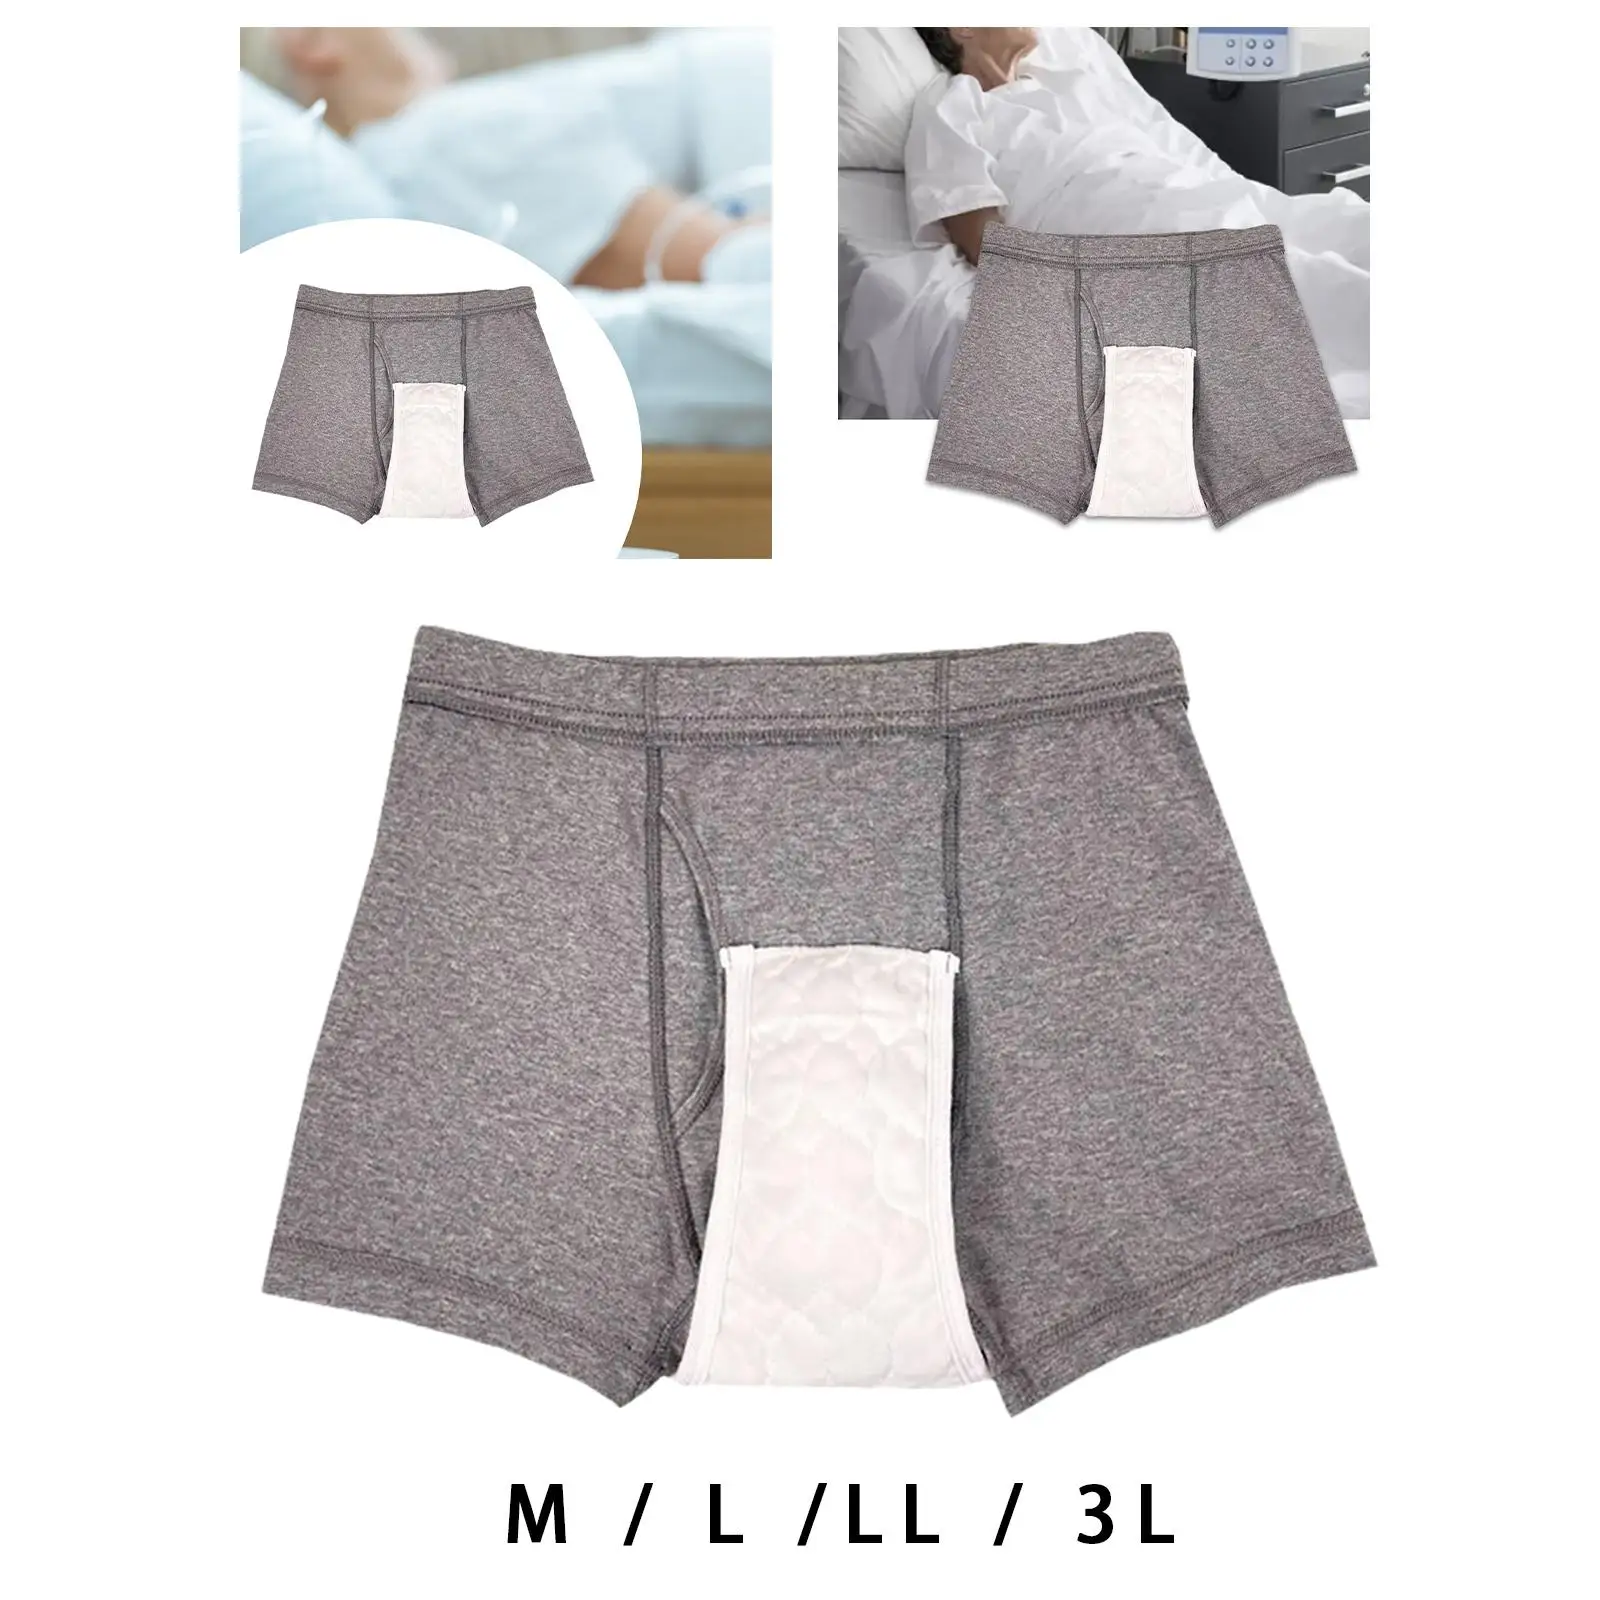 Men Diaper Pants Washable Soft Leakfree Super Absorbent Incontinence Panties Seniors incontinence panties Super Absorbent